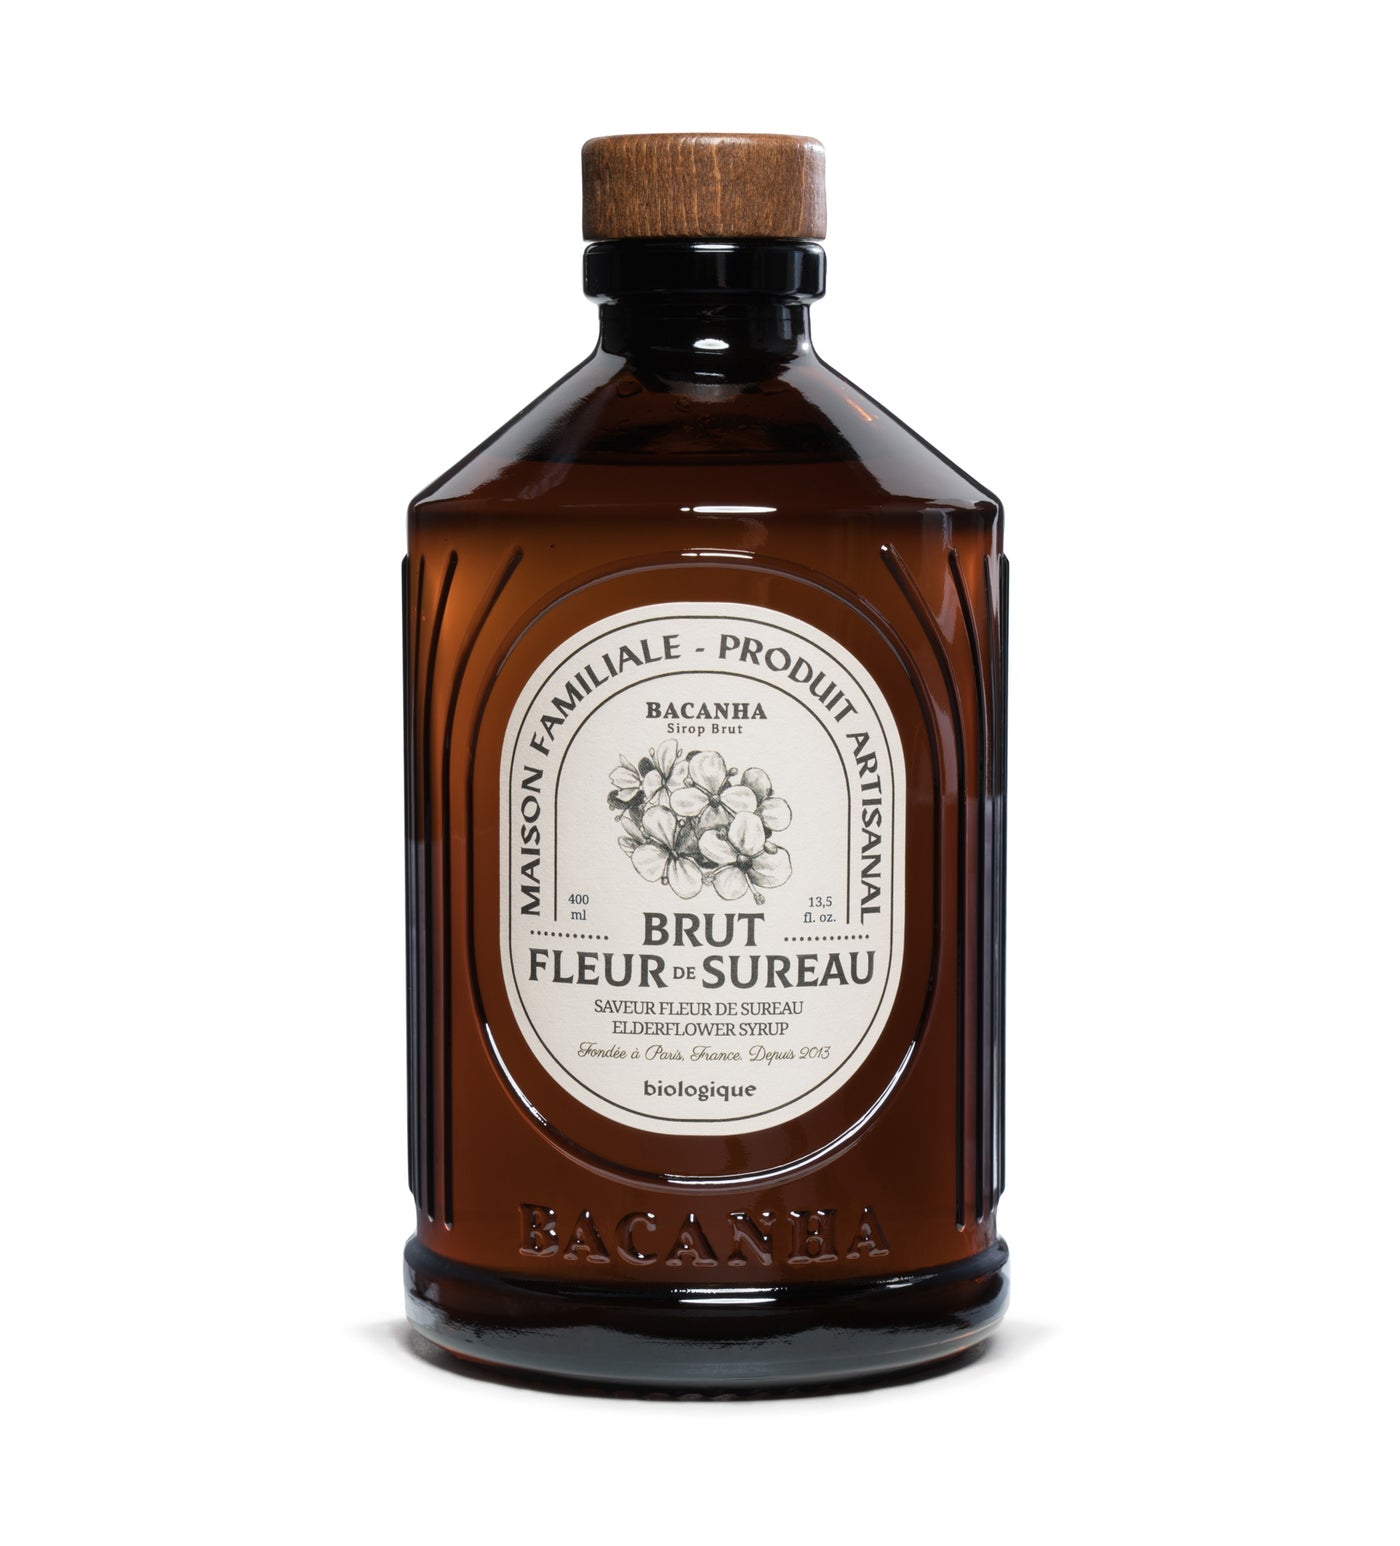 Bacanha Elderflower Syrup